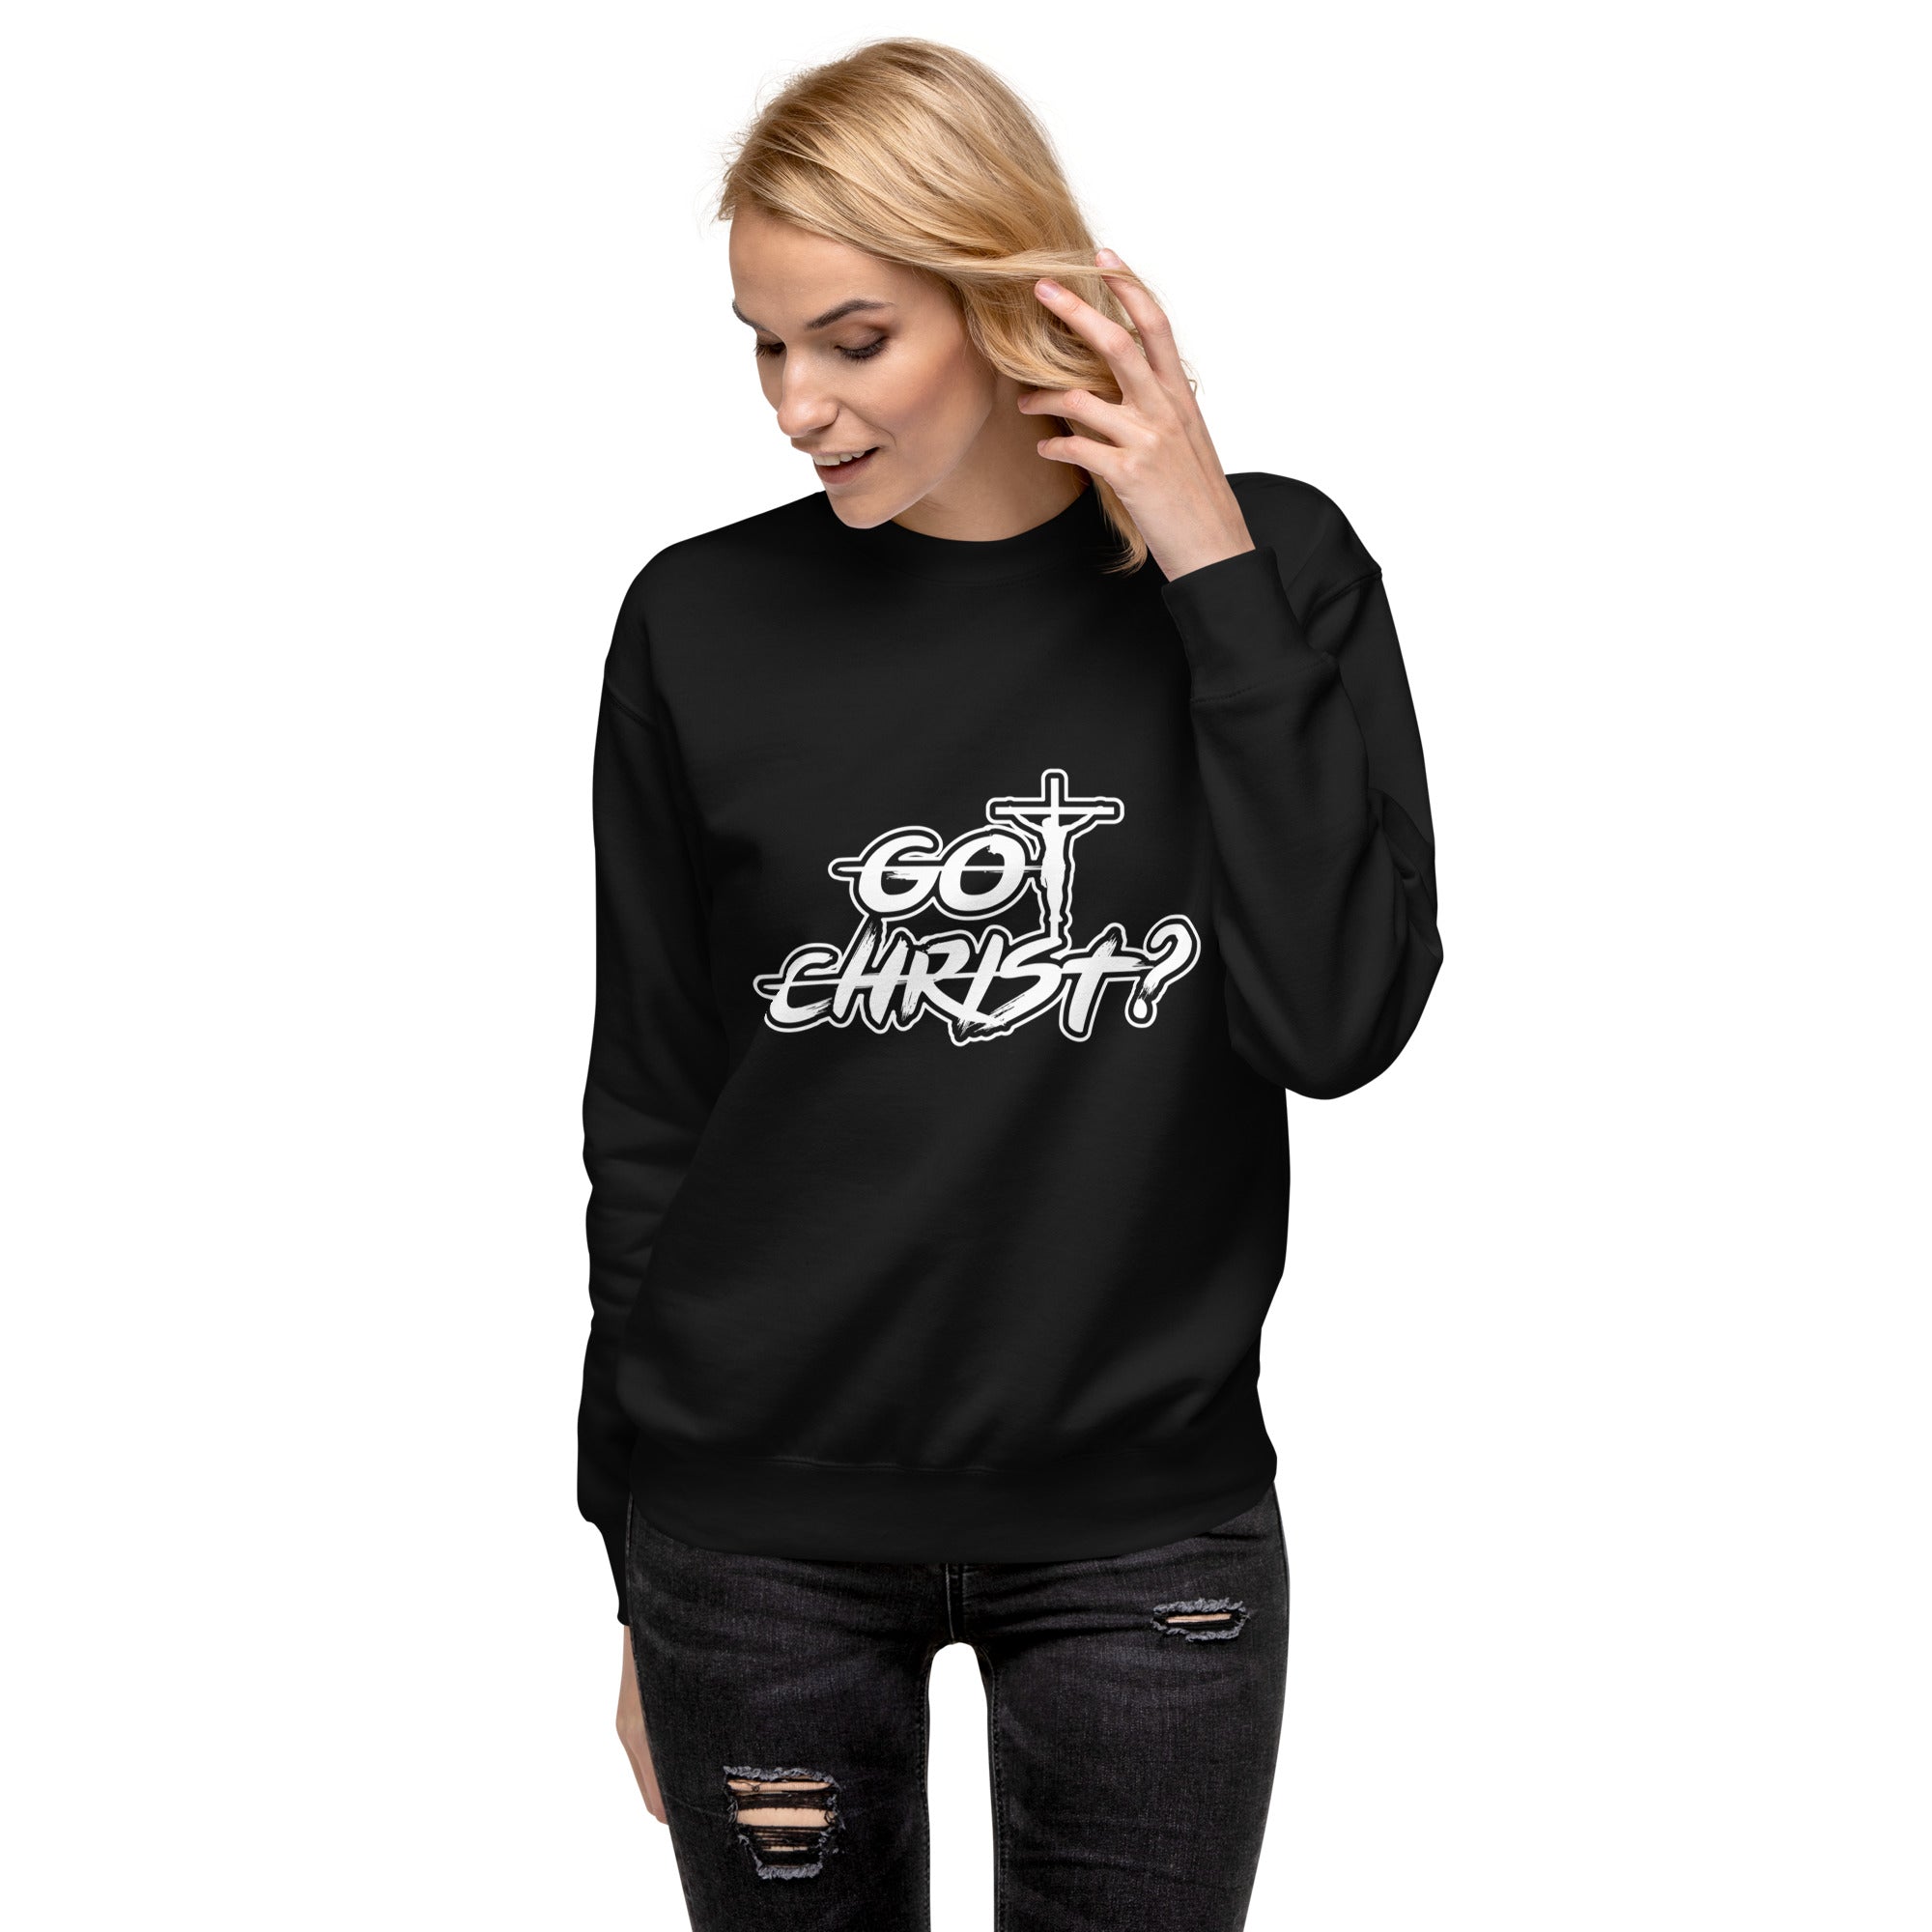 "Got Christ" sweatshirt (multiple colors)